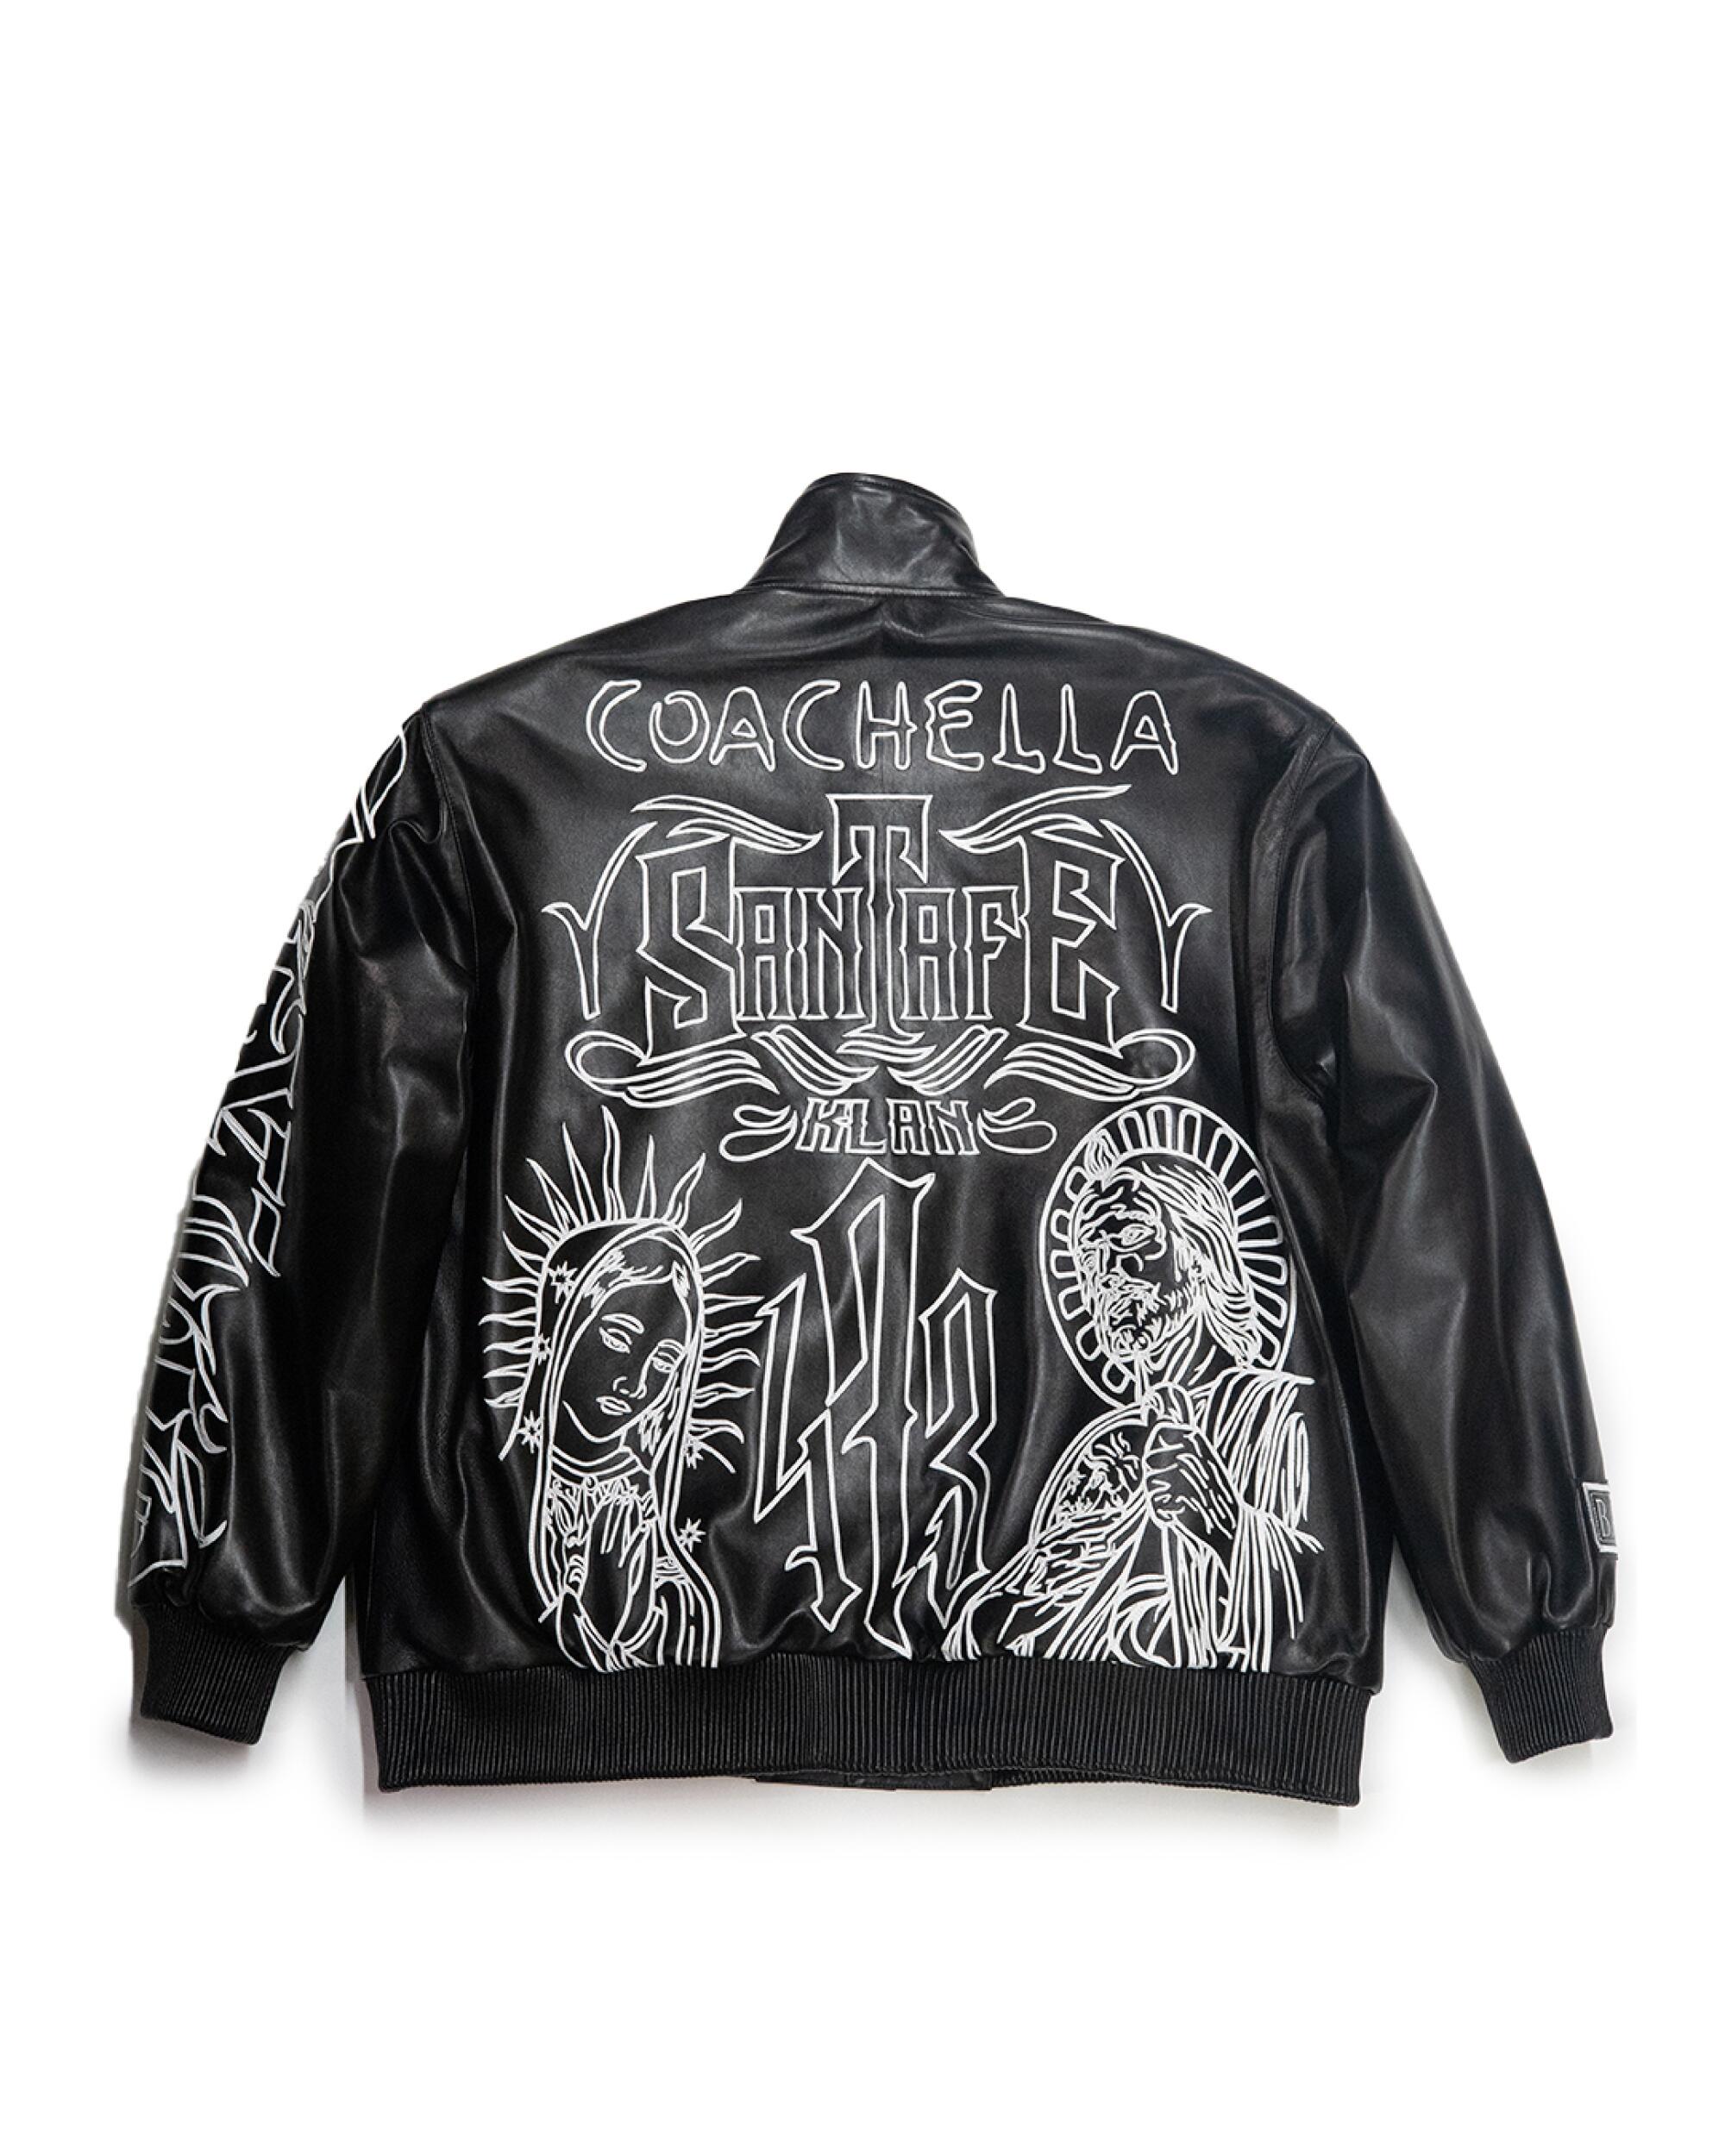 Custom Kiko Baez jacket for singer and rapper Santa Fe Klan